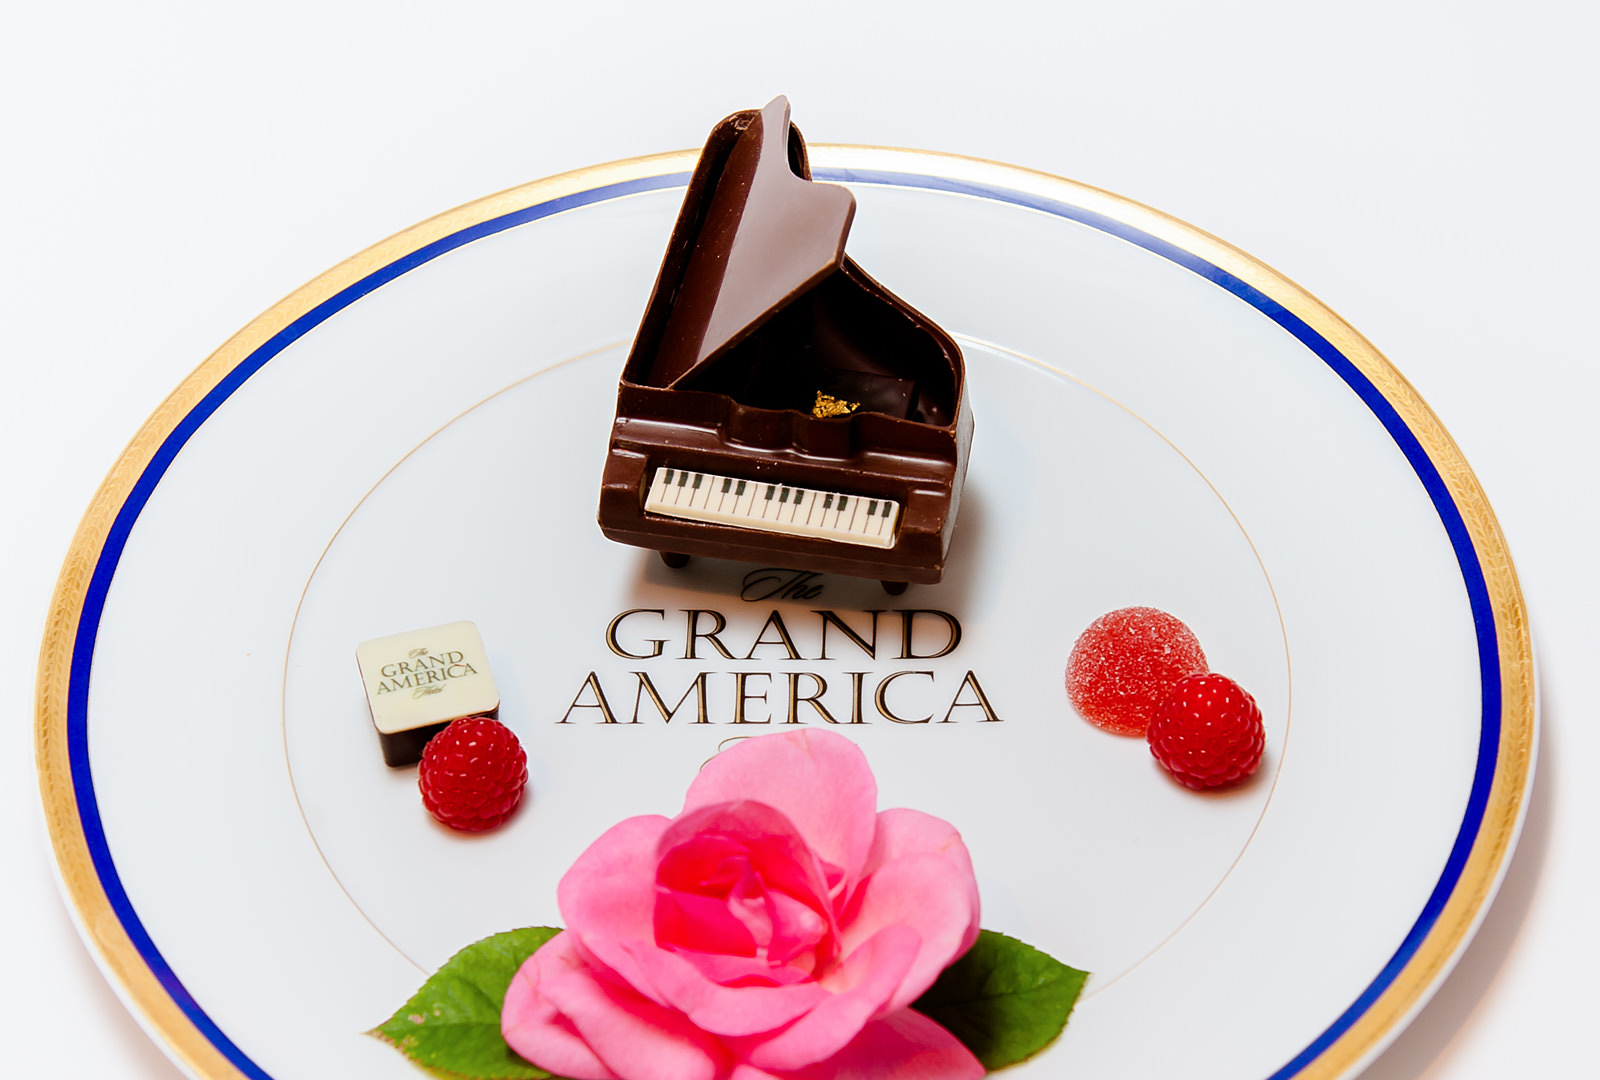 The Grand America Hotel Dark Chocolate Grand Piano With Seasonal Berries and a Fresh Cut Rose